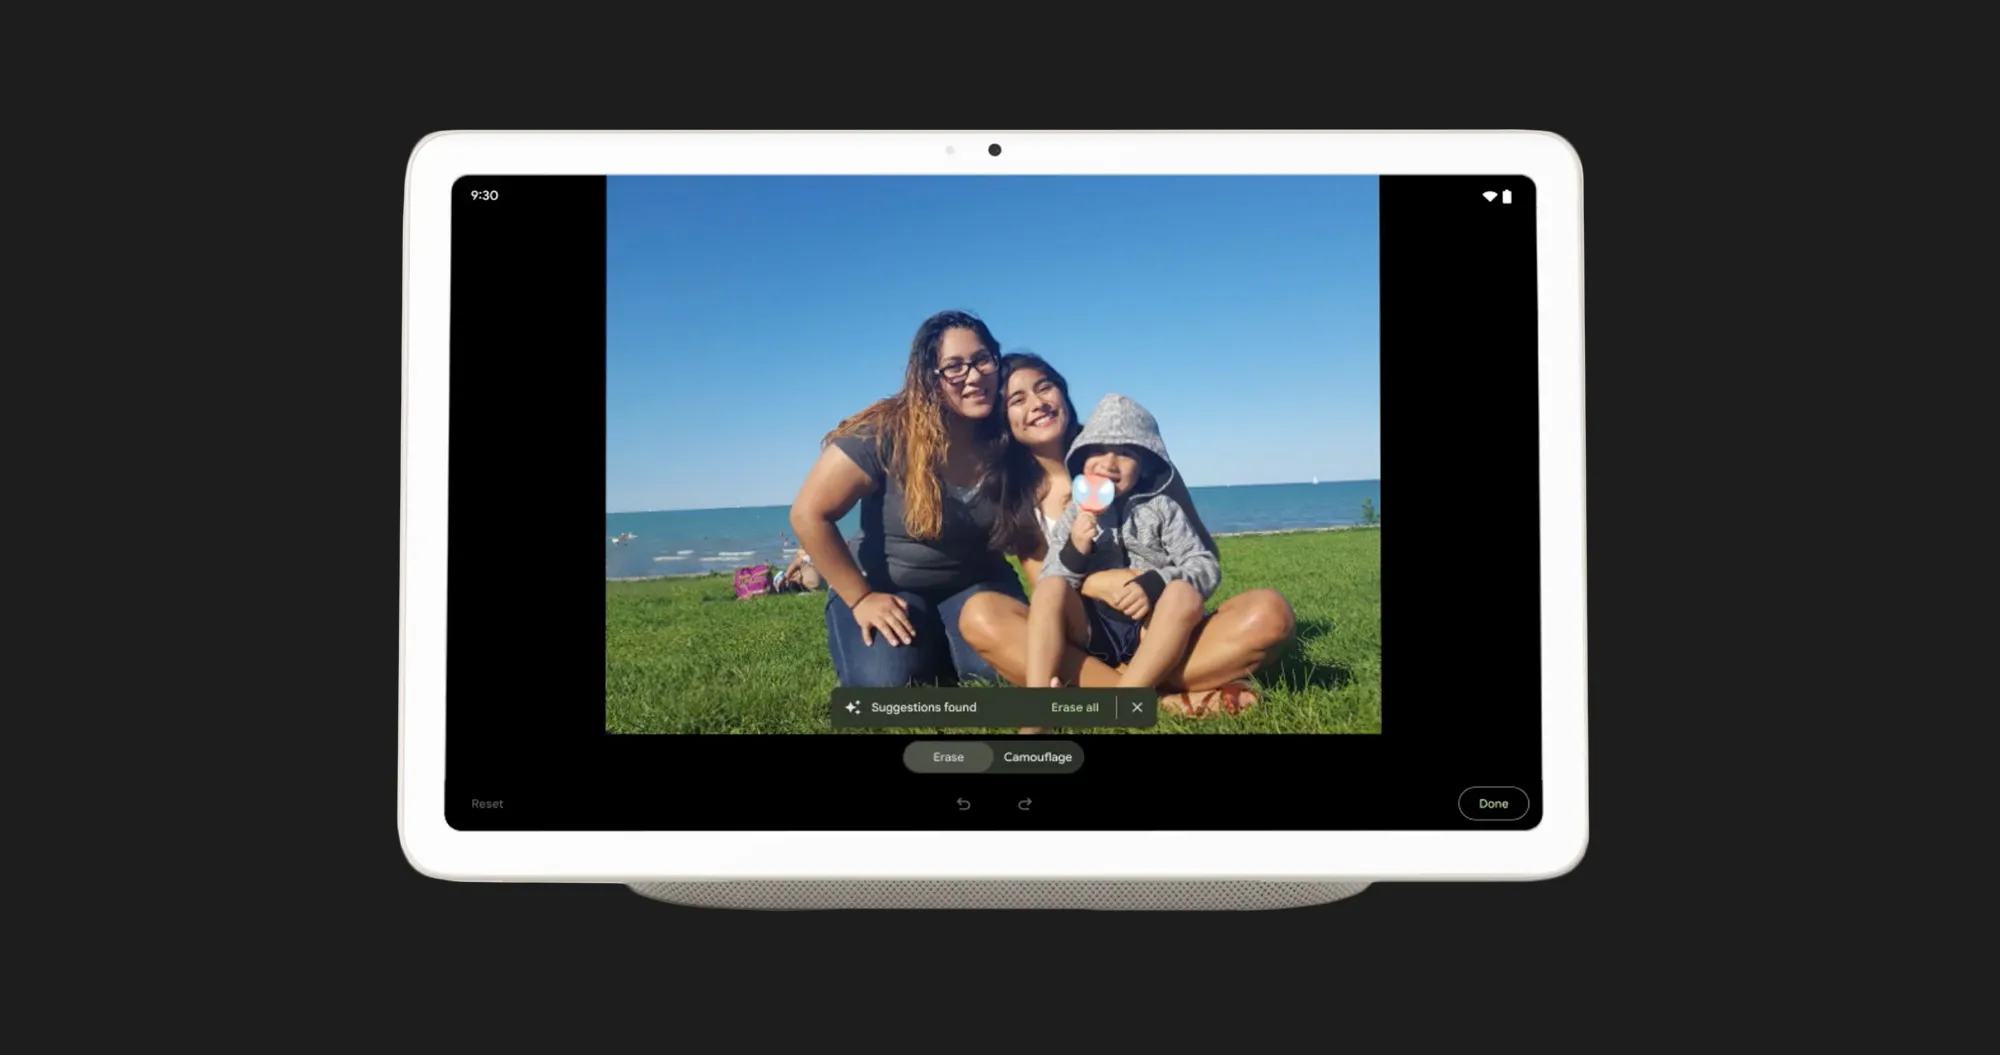 Планшет Google Pixel Tablet 128GB (Porcelain) (JP)